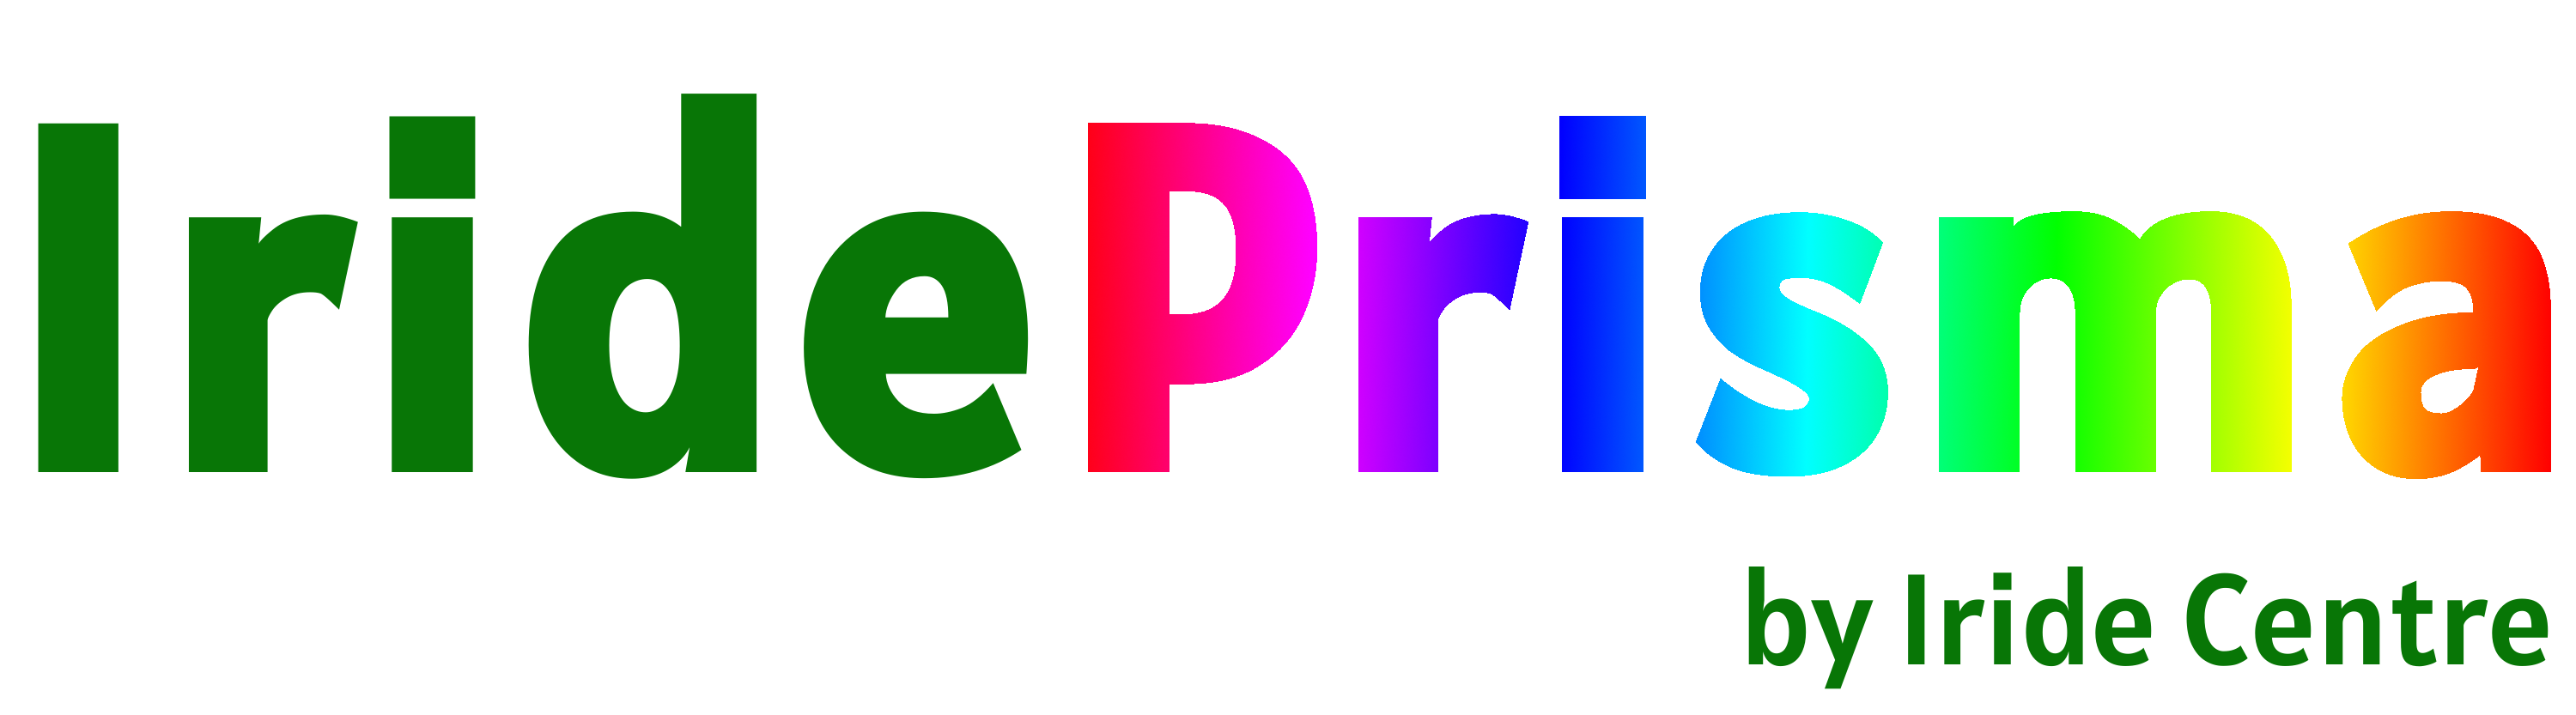 Logo Prisma sans arrière-plan